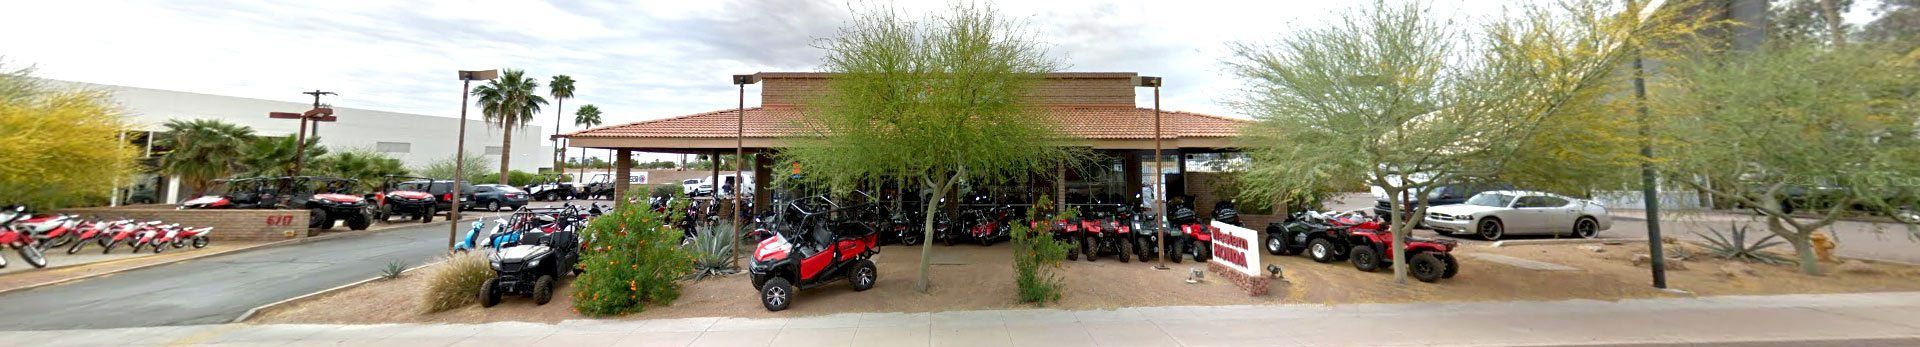 Western Honda Powersports dealership in Scottsdale, AZ